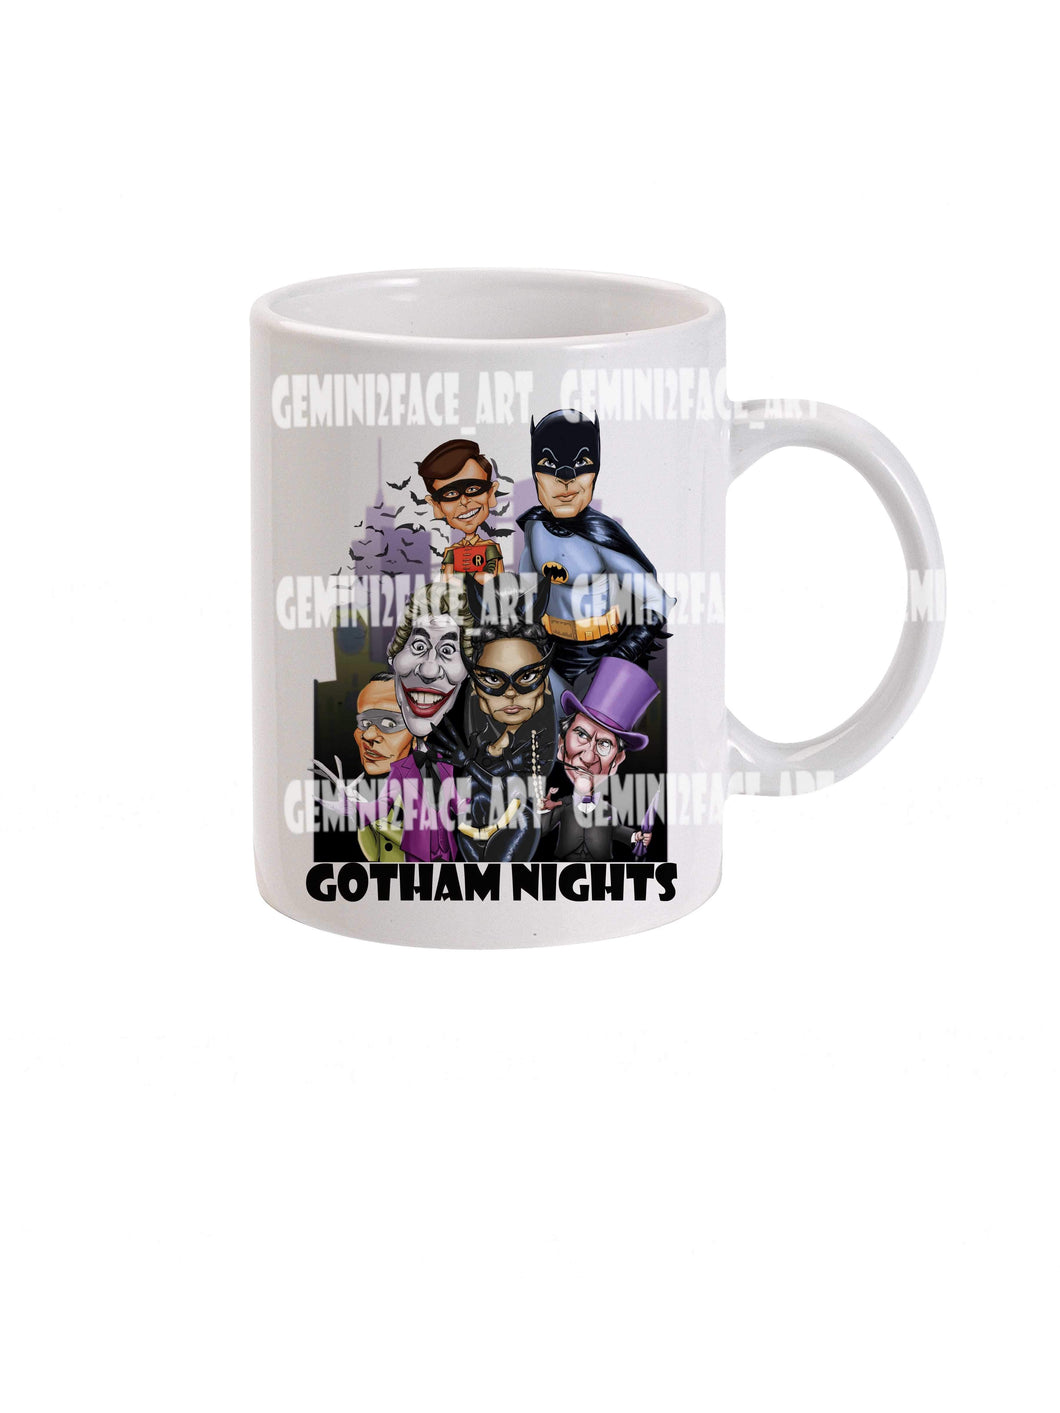 Gotham Nights Mug Gemini2face Art E-Store 